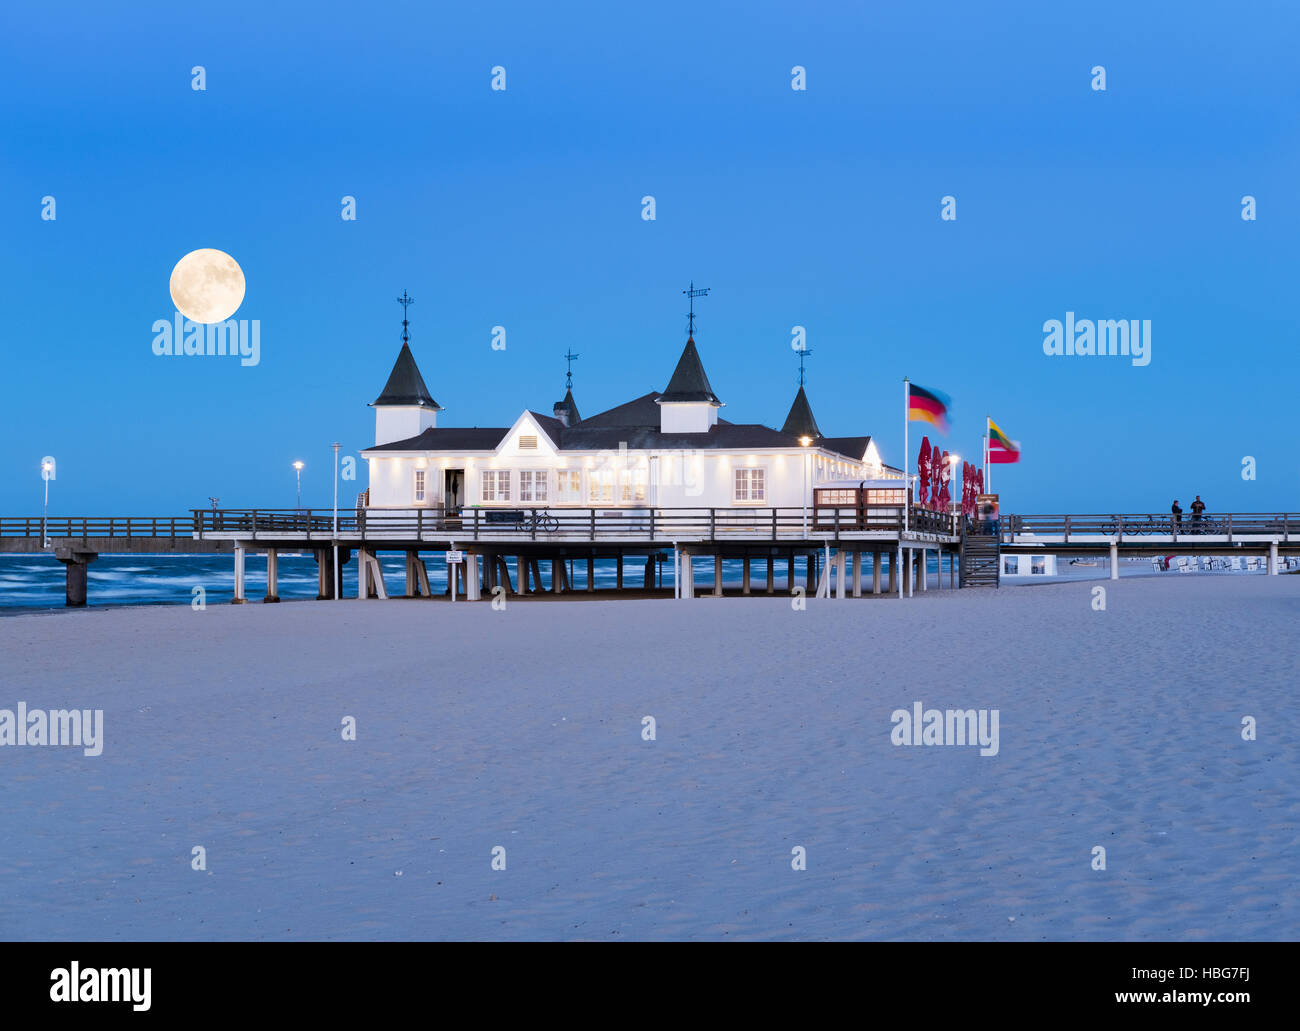 Ahlbeck seaside resort pier at dusk, full moon, Ahlbeck, Heringsdorf, Usedom, Baltic Sea, Mecklenburg-Western Pomerania, Germany Stock Photo